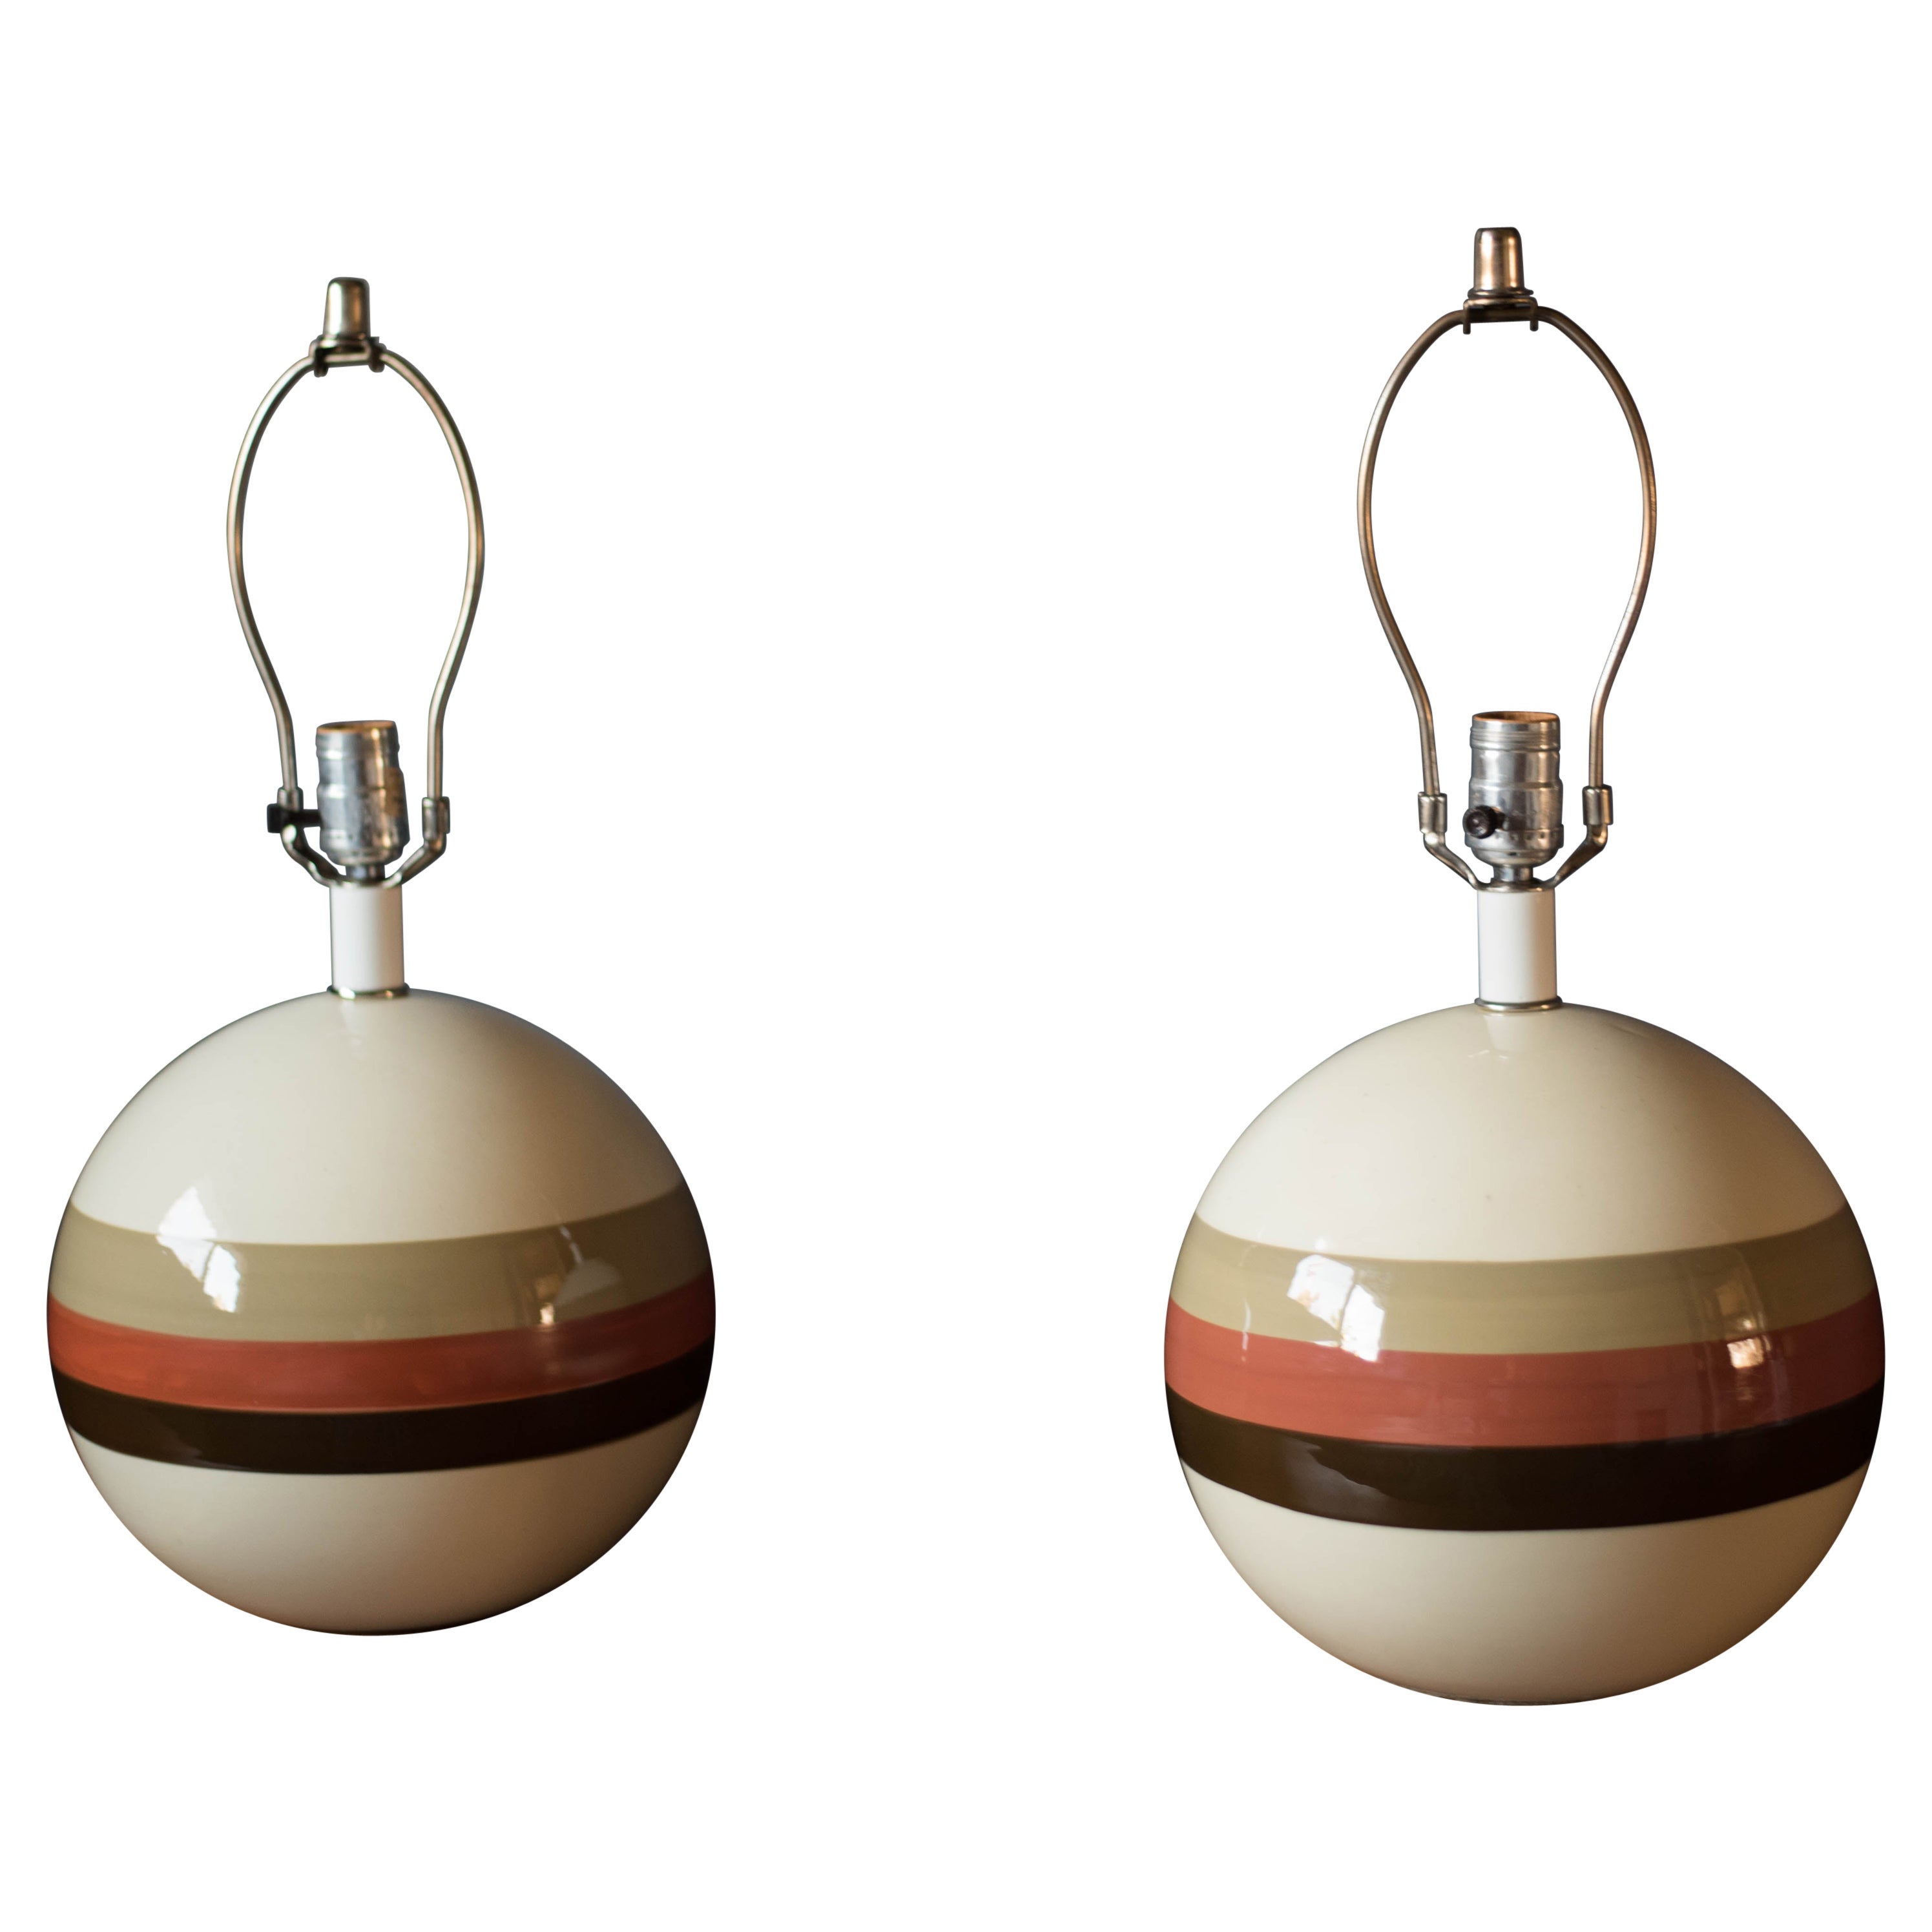 Pair of Vintage Mod Round Ceramic Accent Lamps